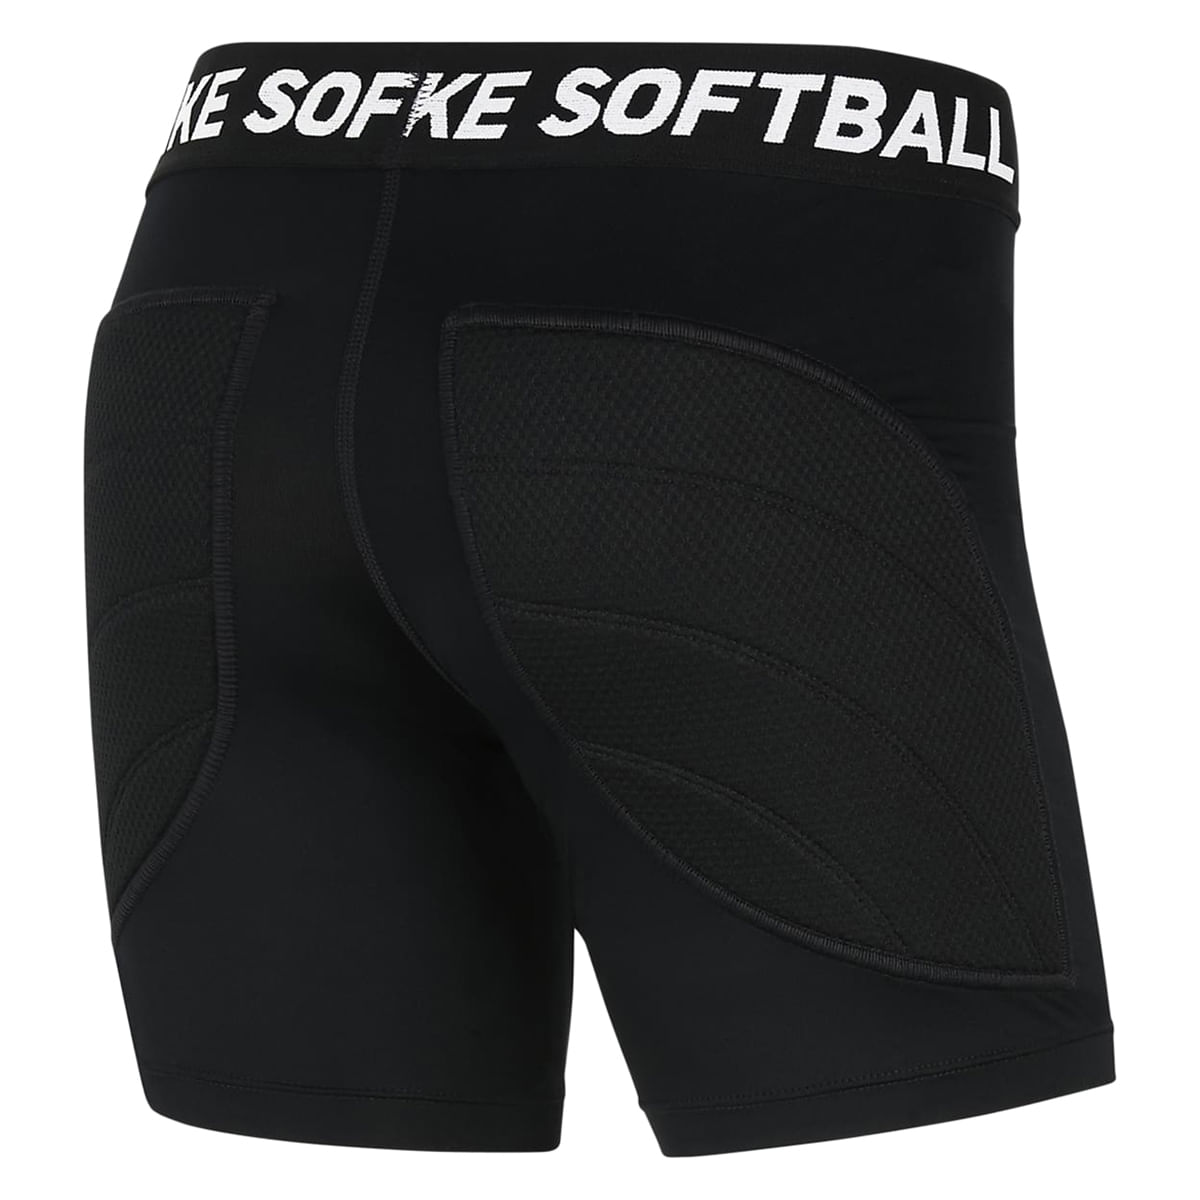 Nike Women's Slider Softball Shorts